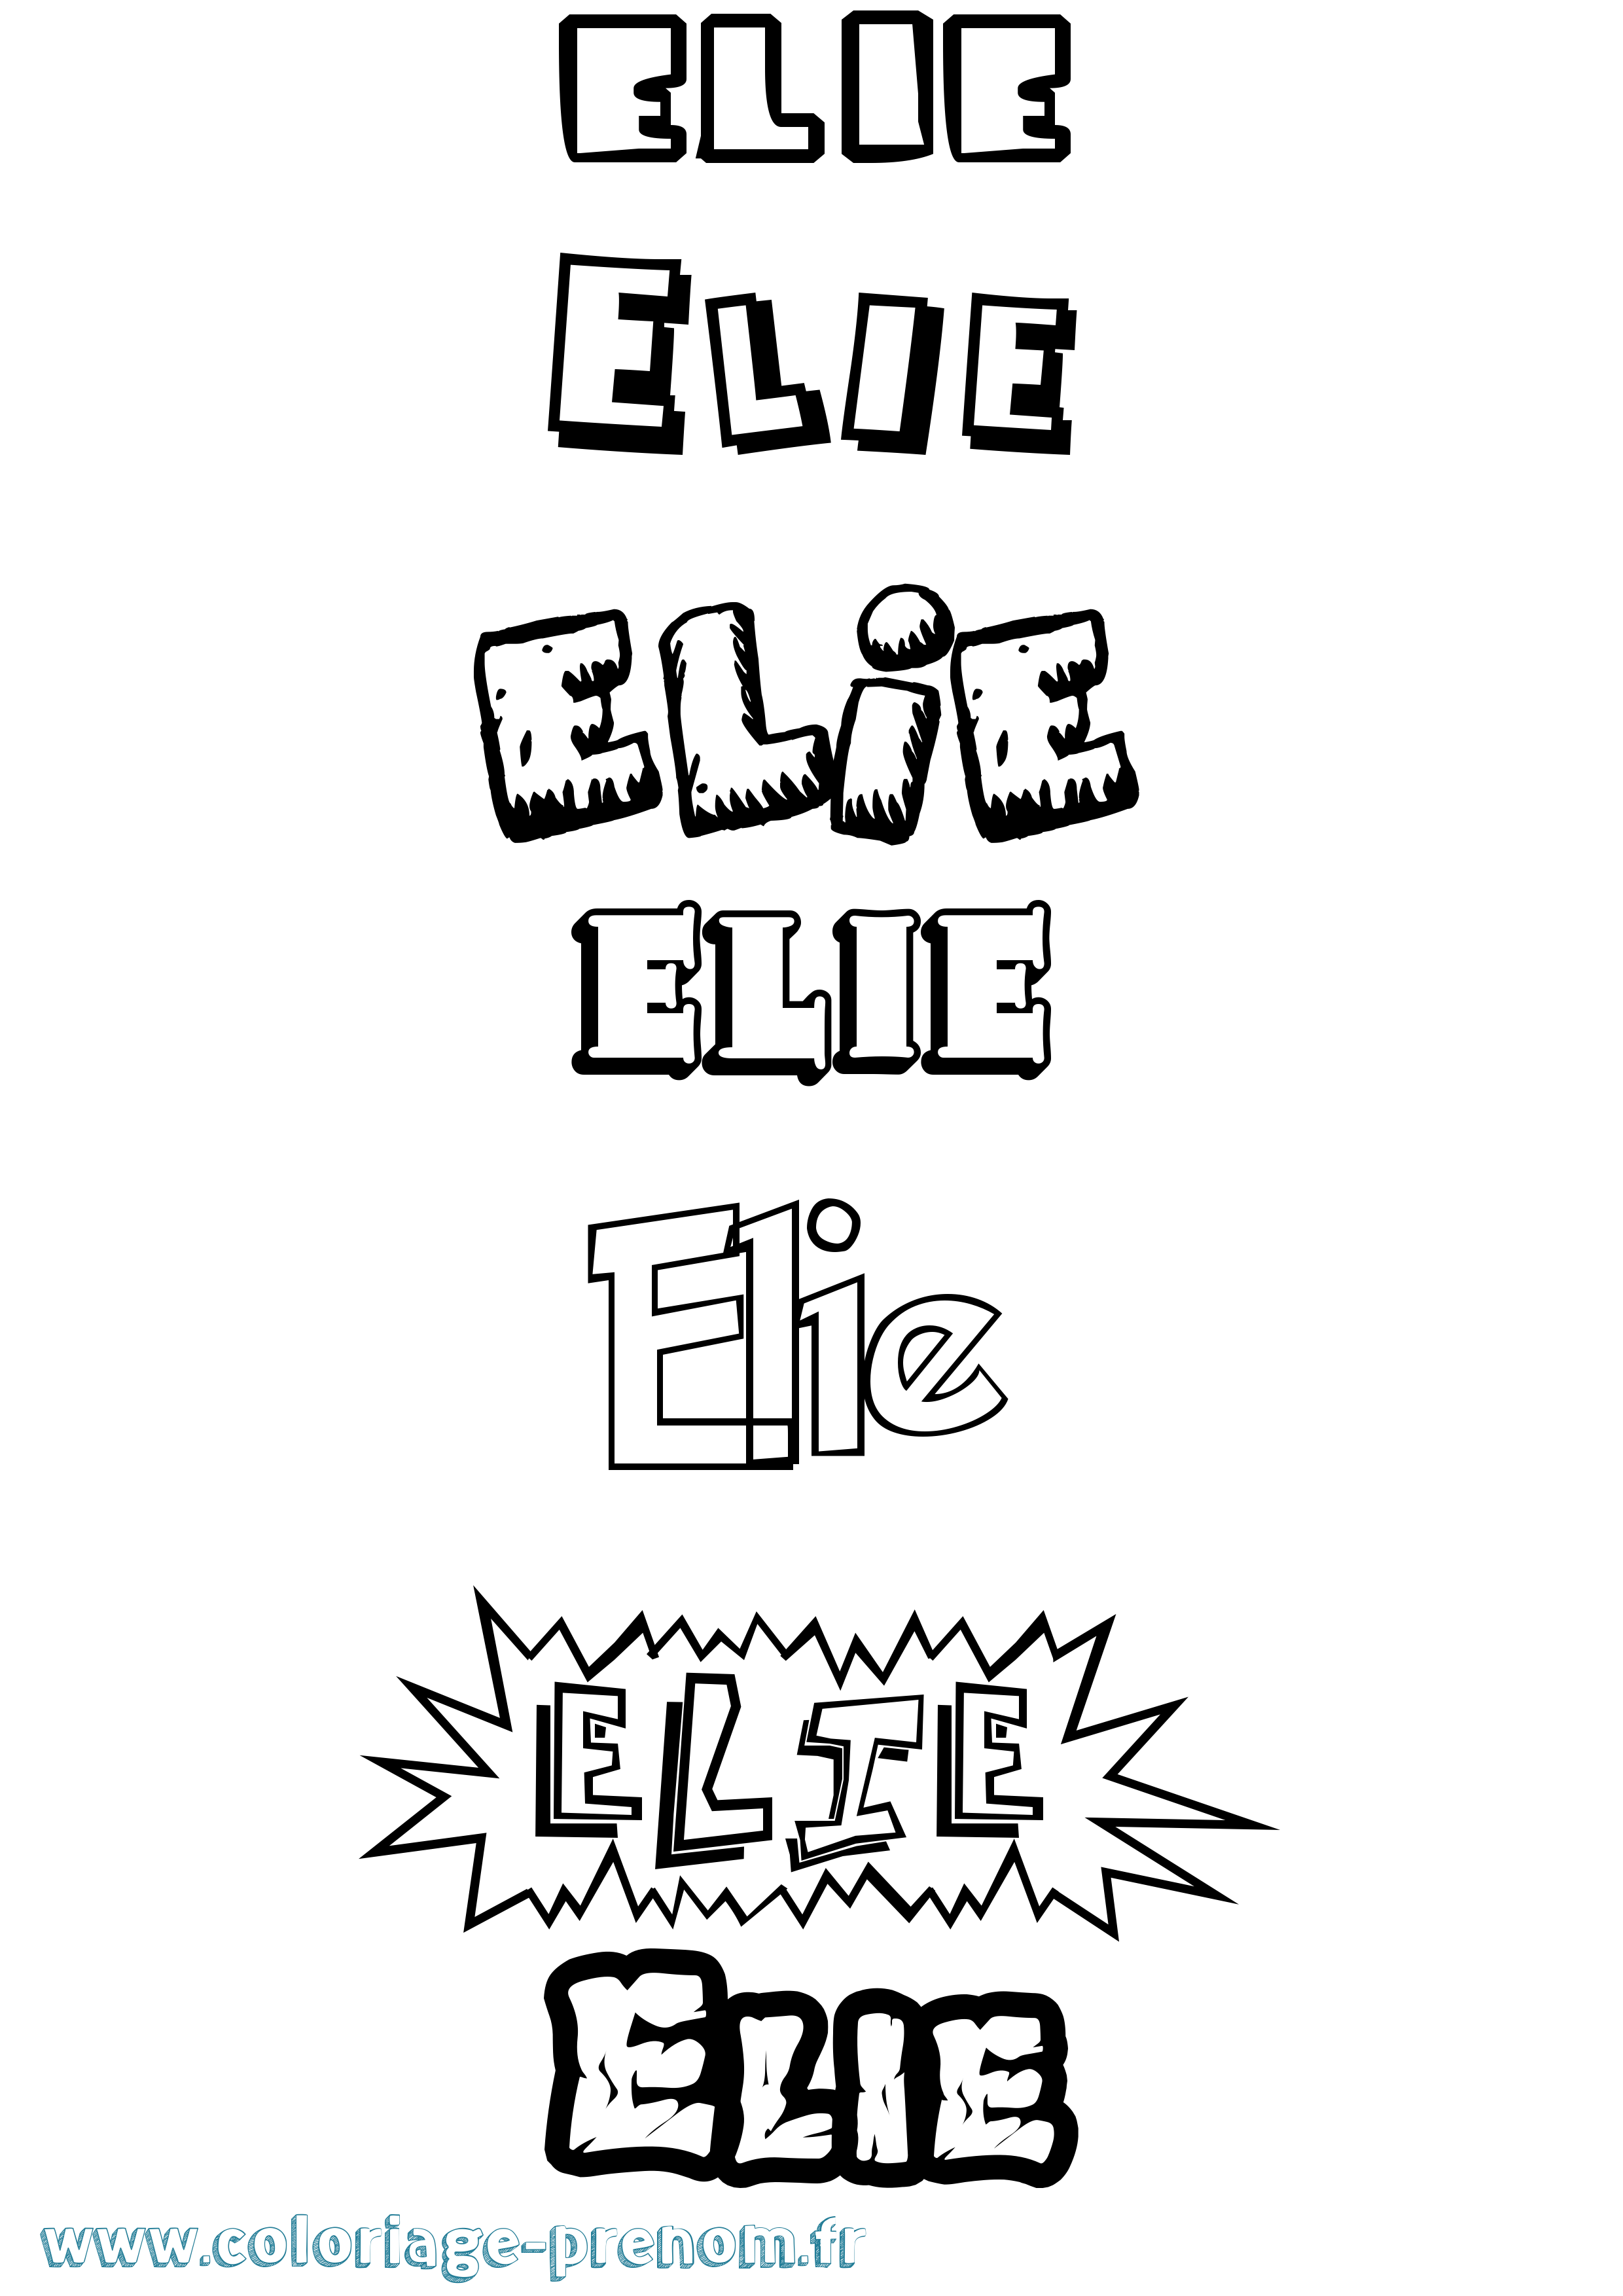 Coloriage prénom Elie